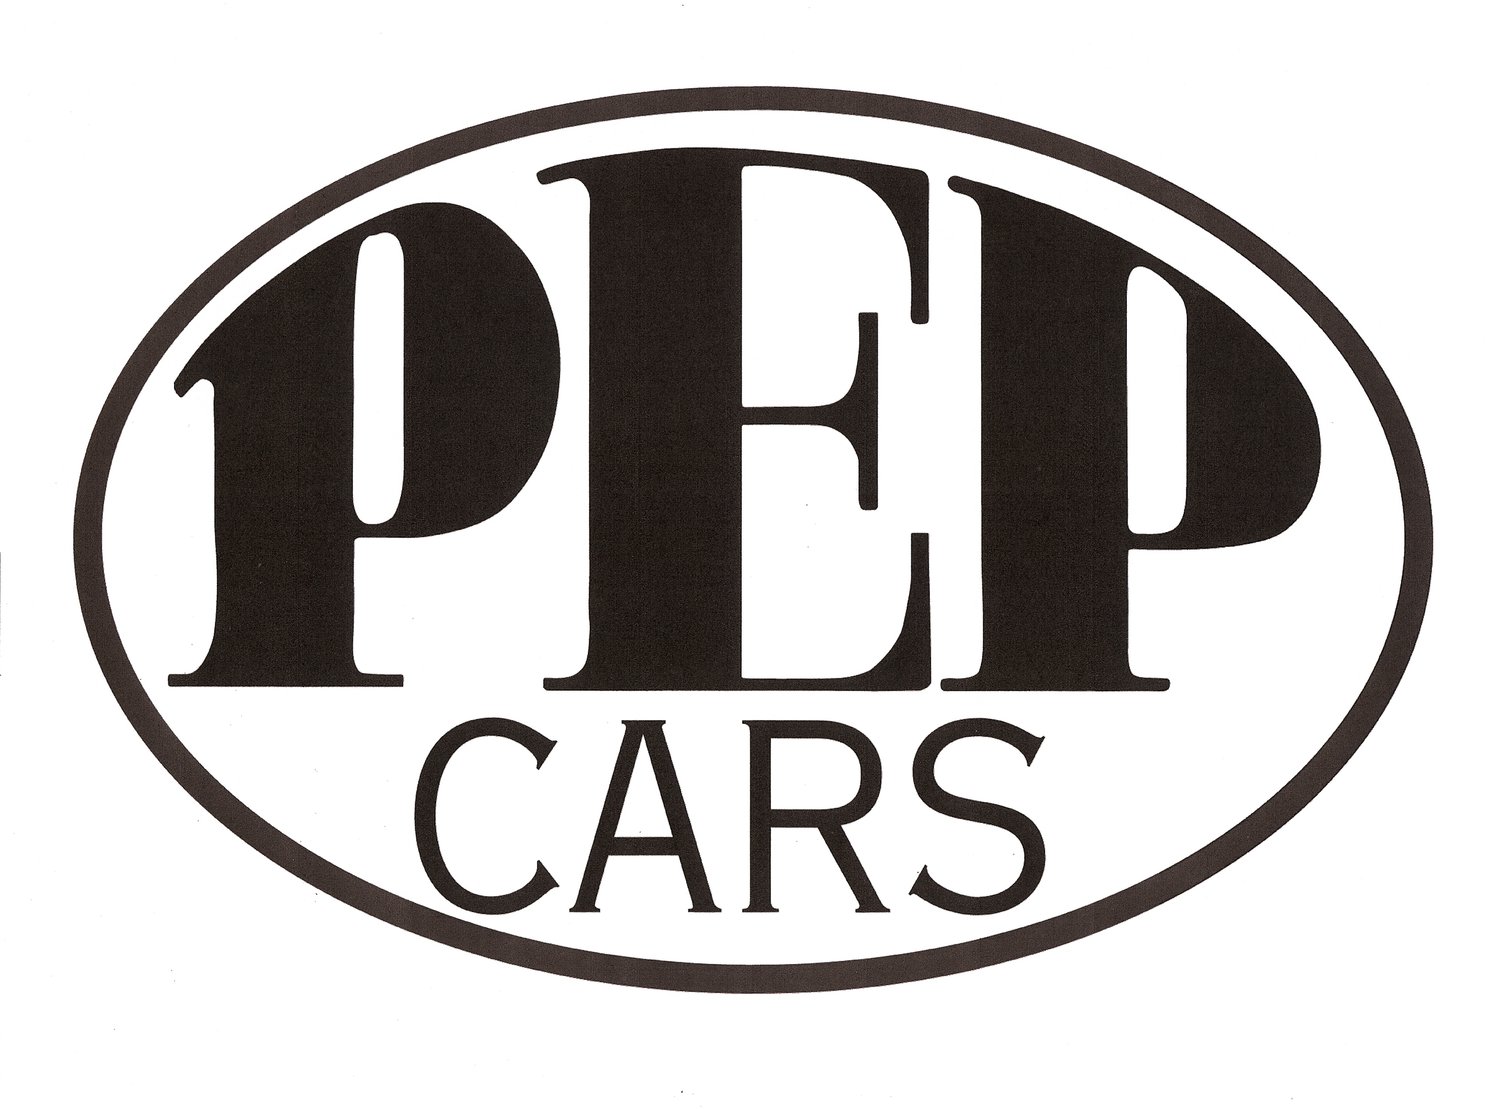 PEP Cars